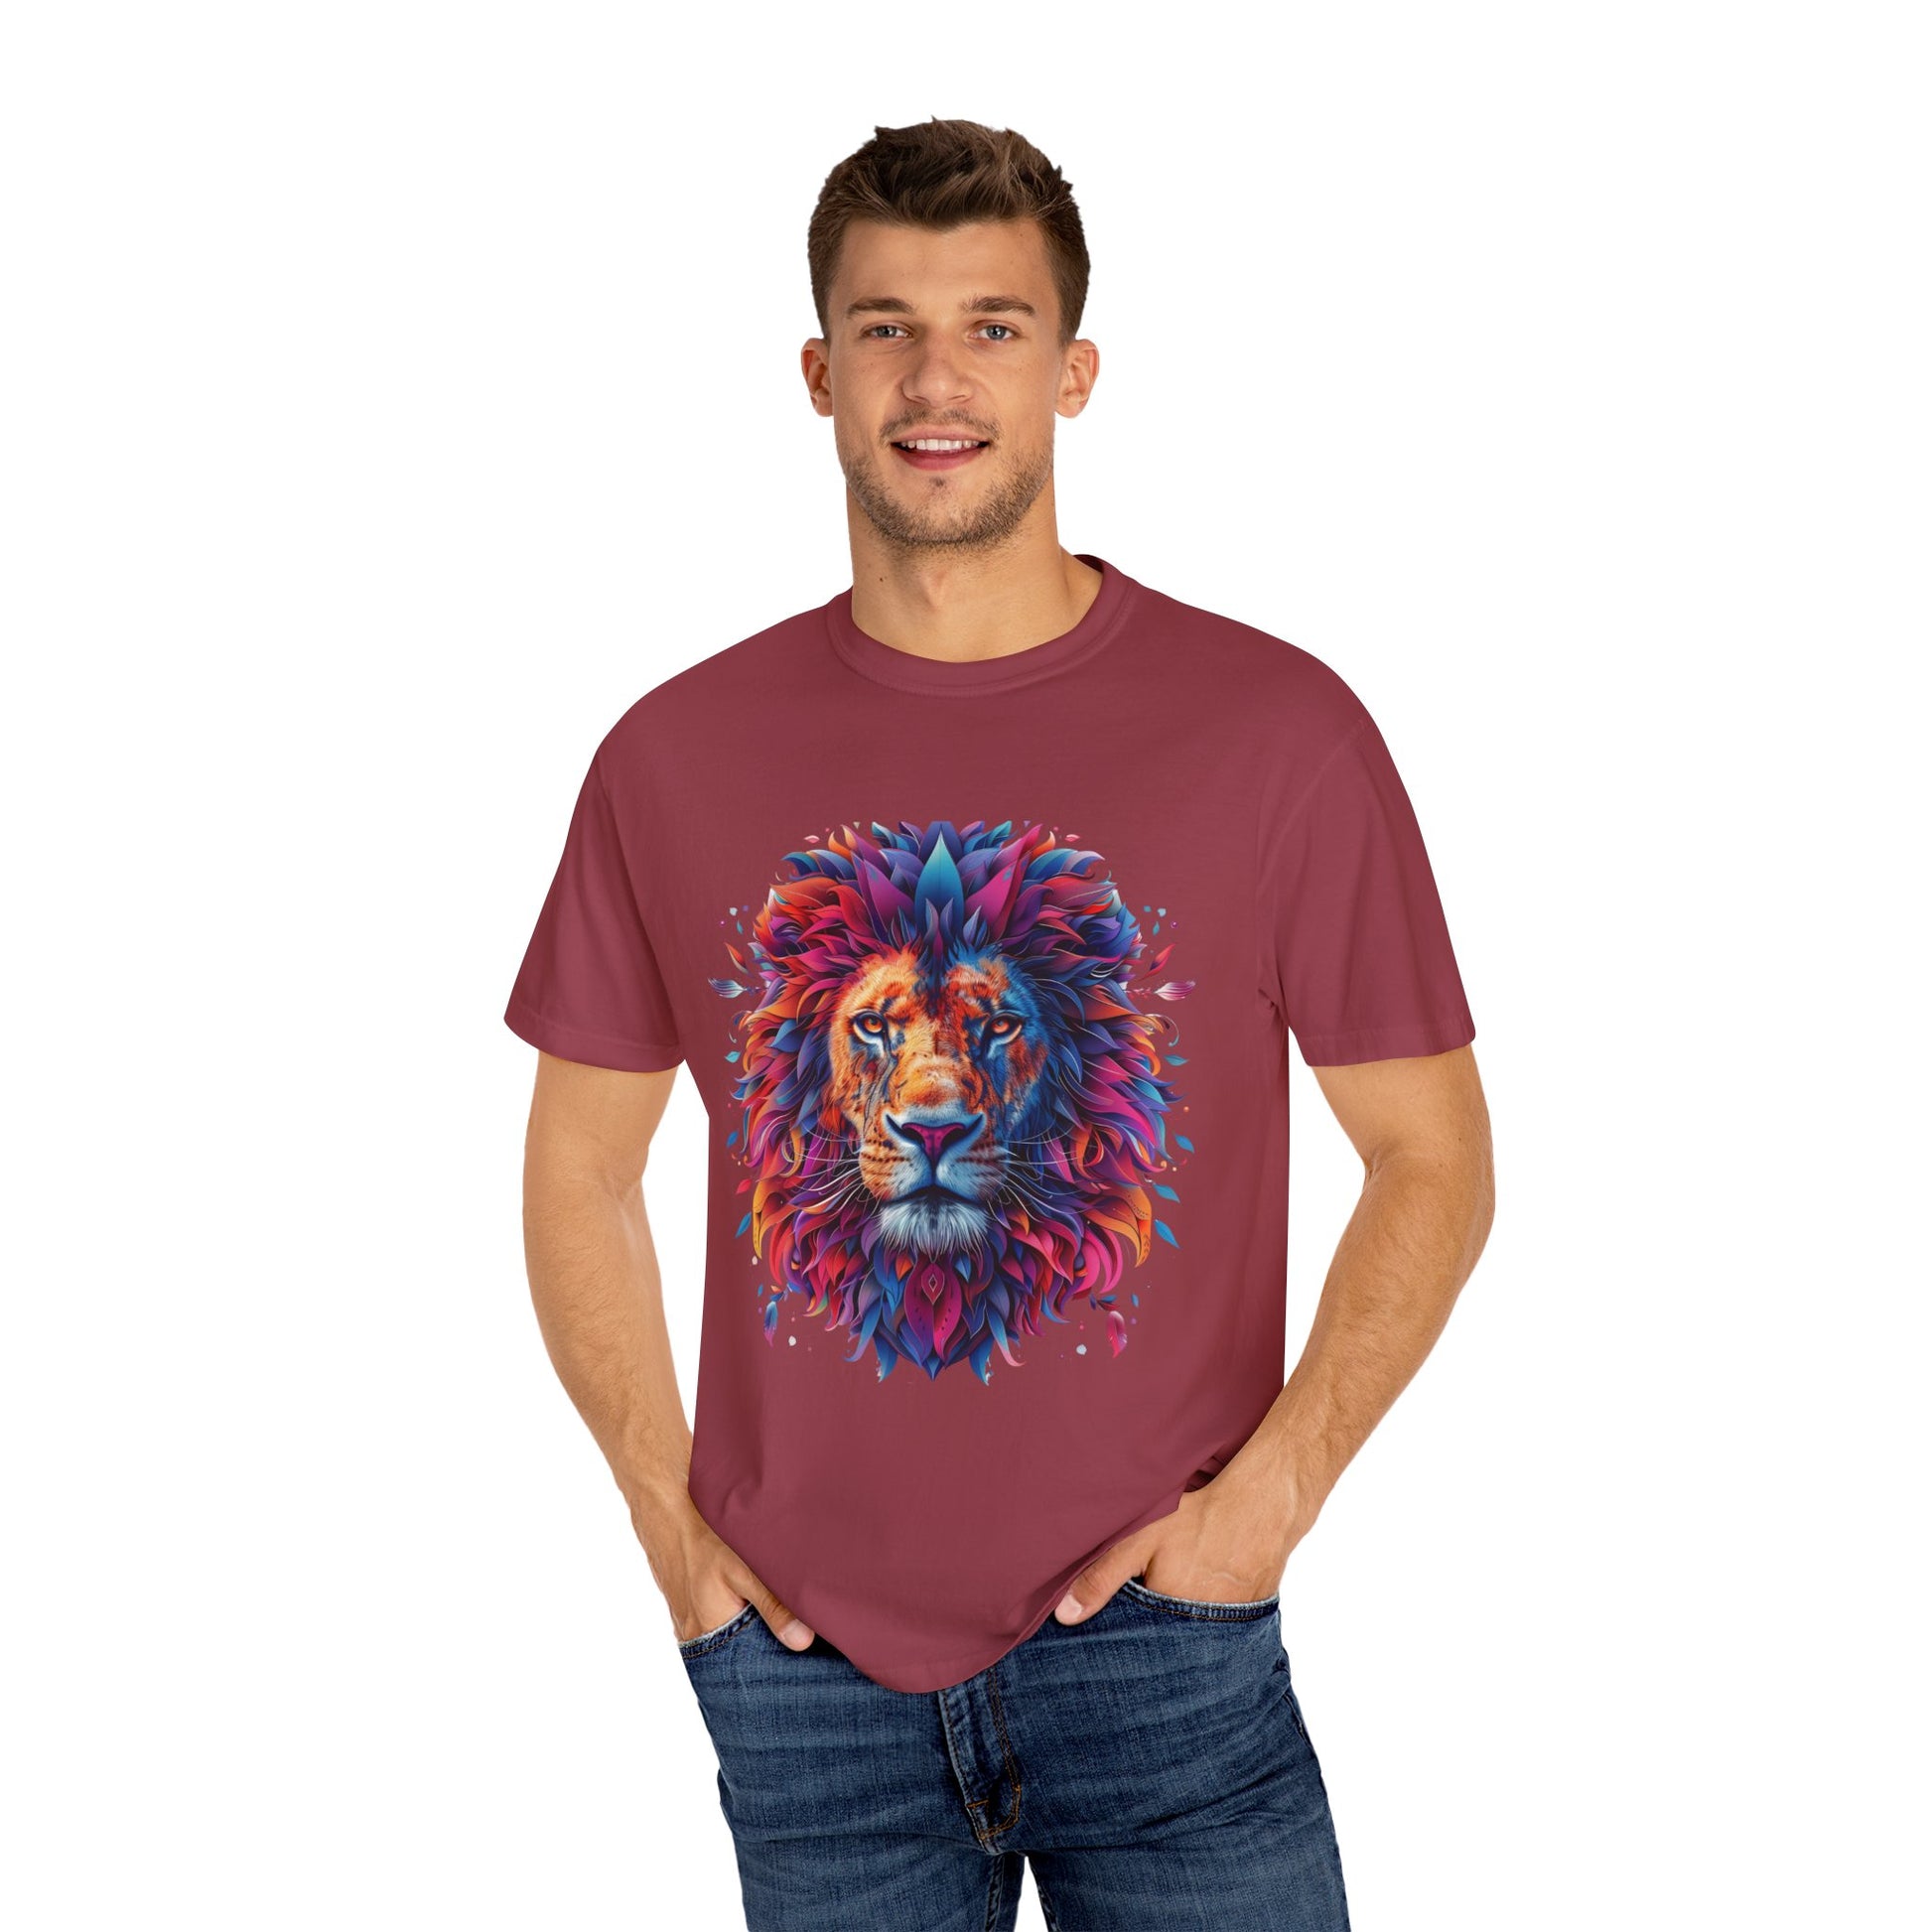 Lion Head Cool Graphic Design Novelty Unisex Garment-dyed T-shirt Cotton Funny Humorous Graphic Soft Premium Unisex Men Women Chili T-shirt Birthday Gift-36